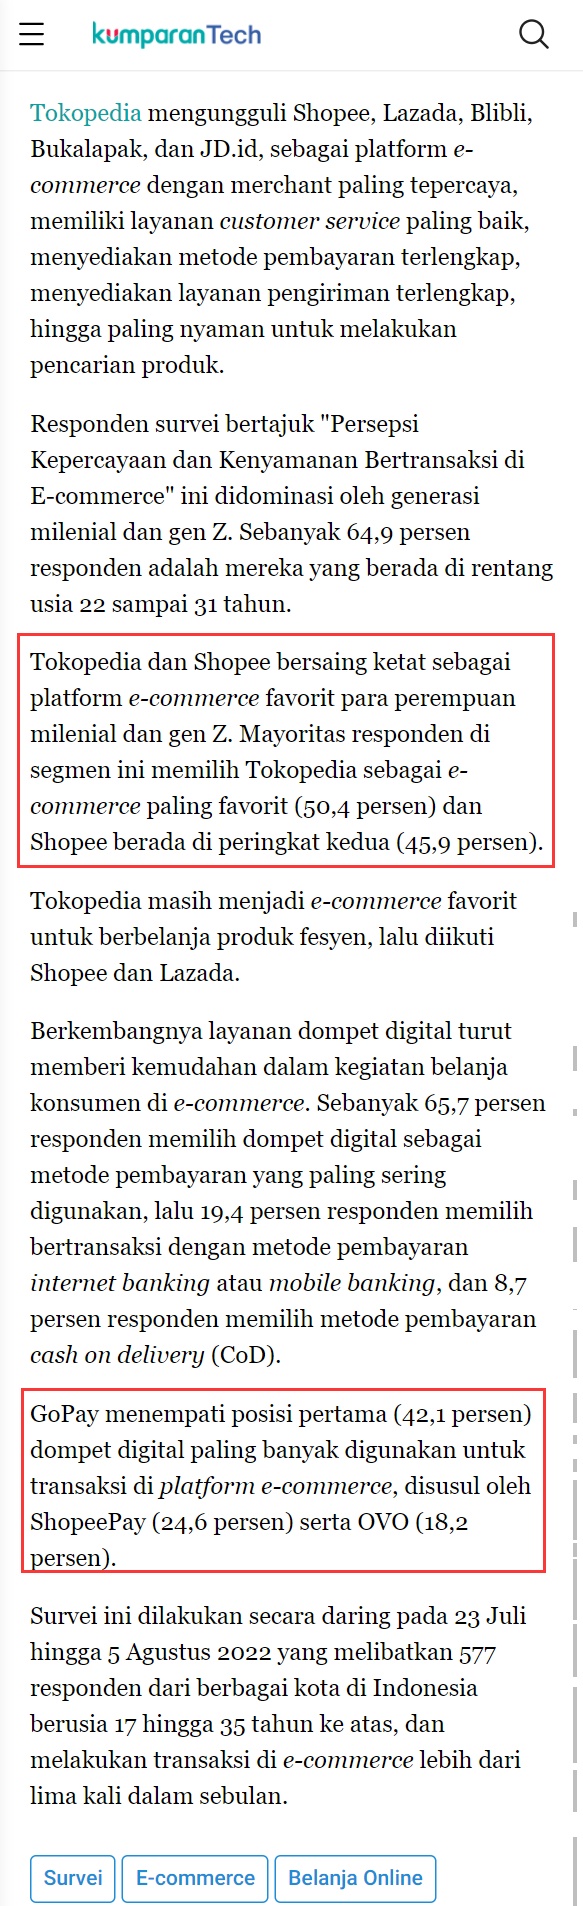 Kumparan印尼消费者调查：Tokopedia是千禧一代和Z世代最信任的电商平台